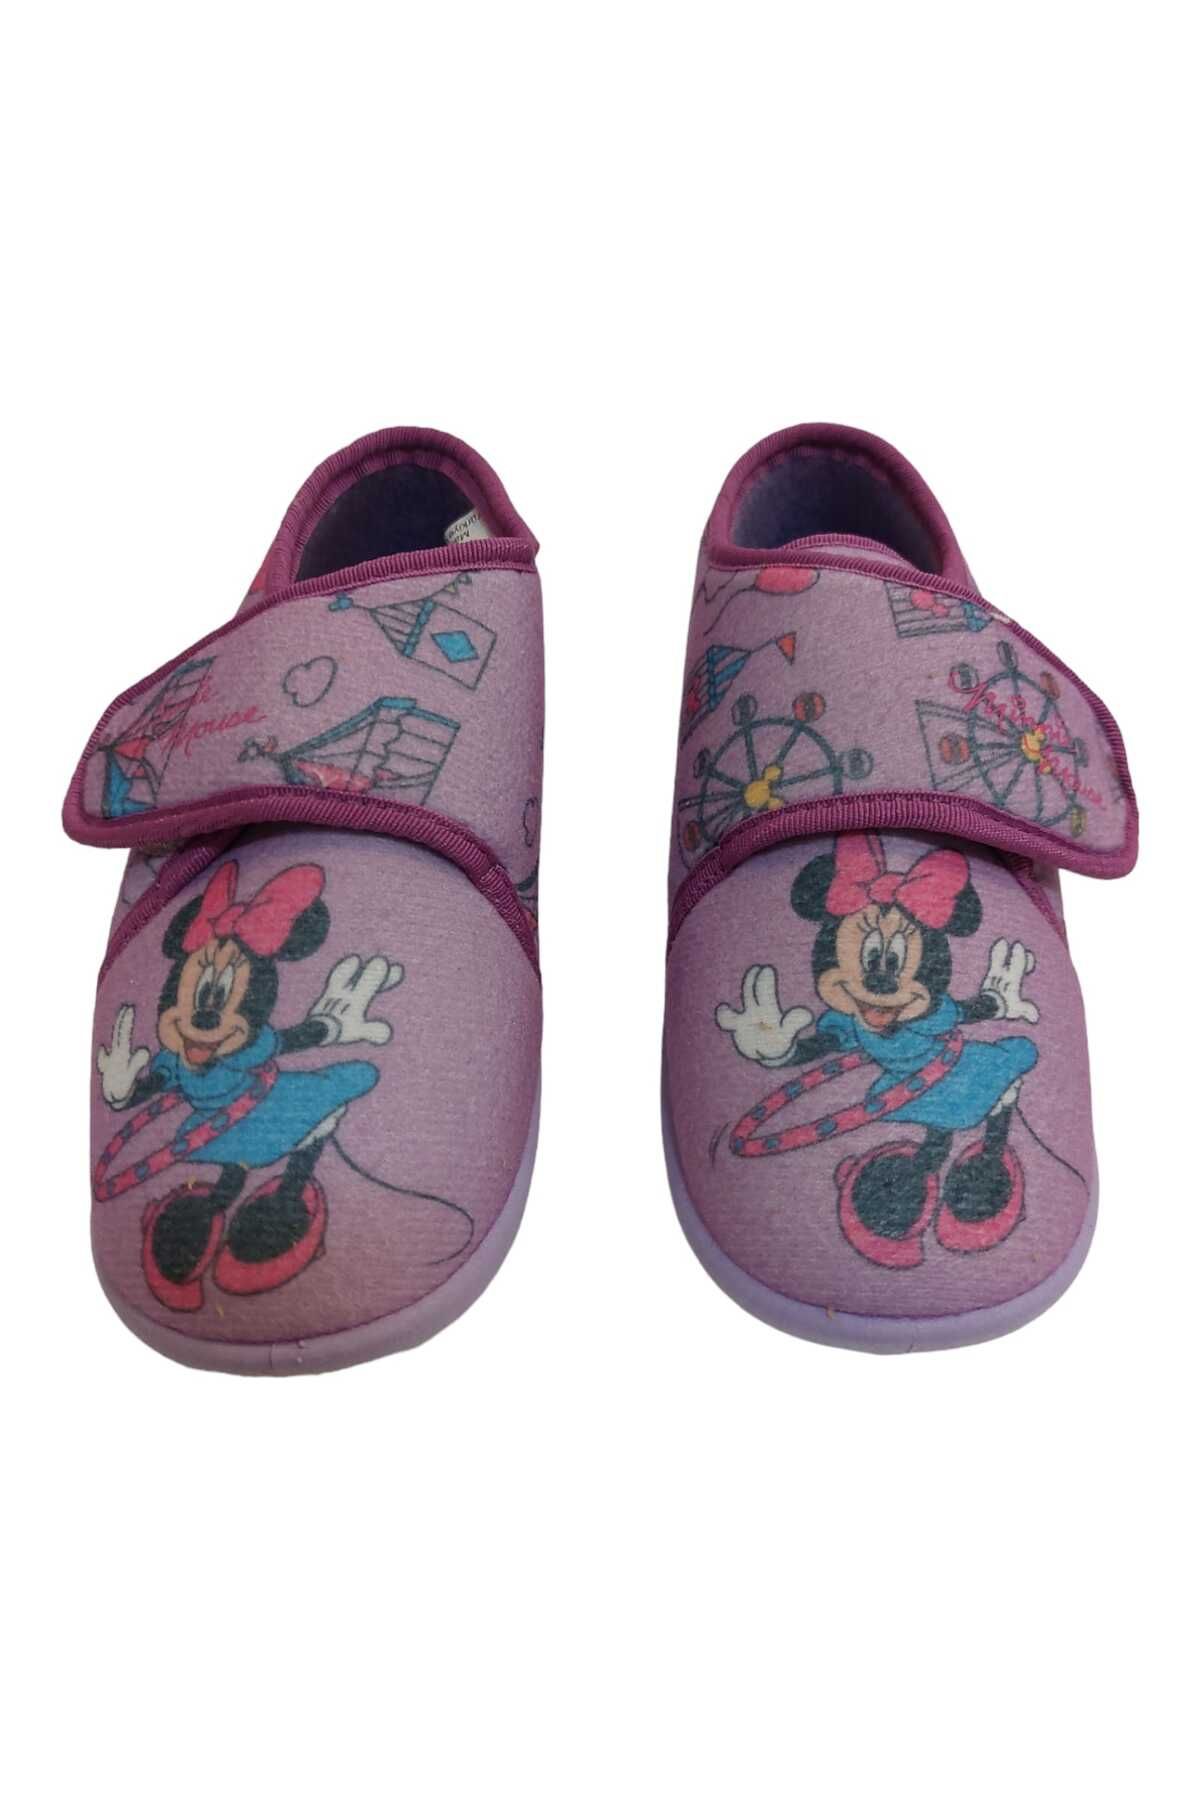 DİSNEY Minnie Mouse Kız Çocuk Panduf 26-29